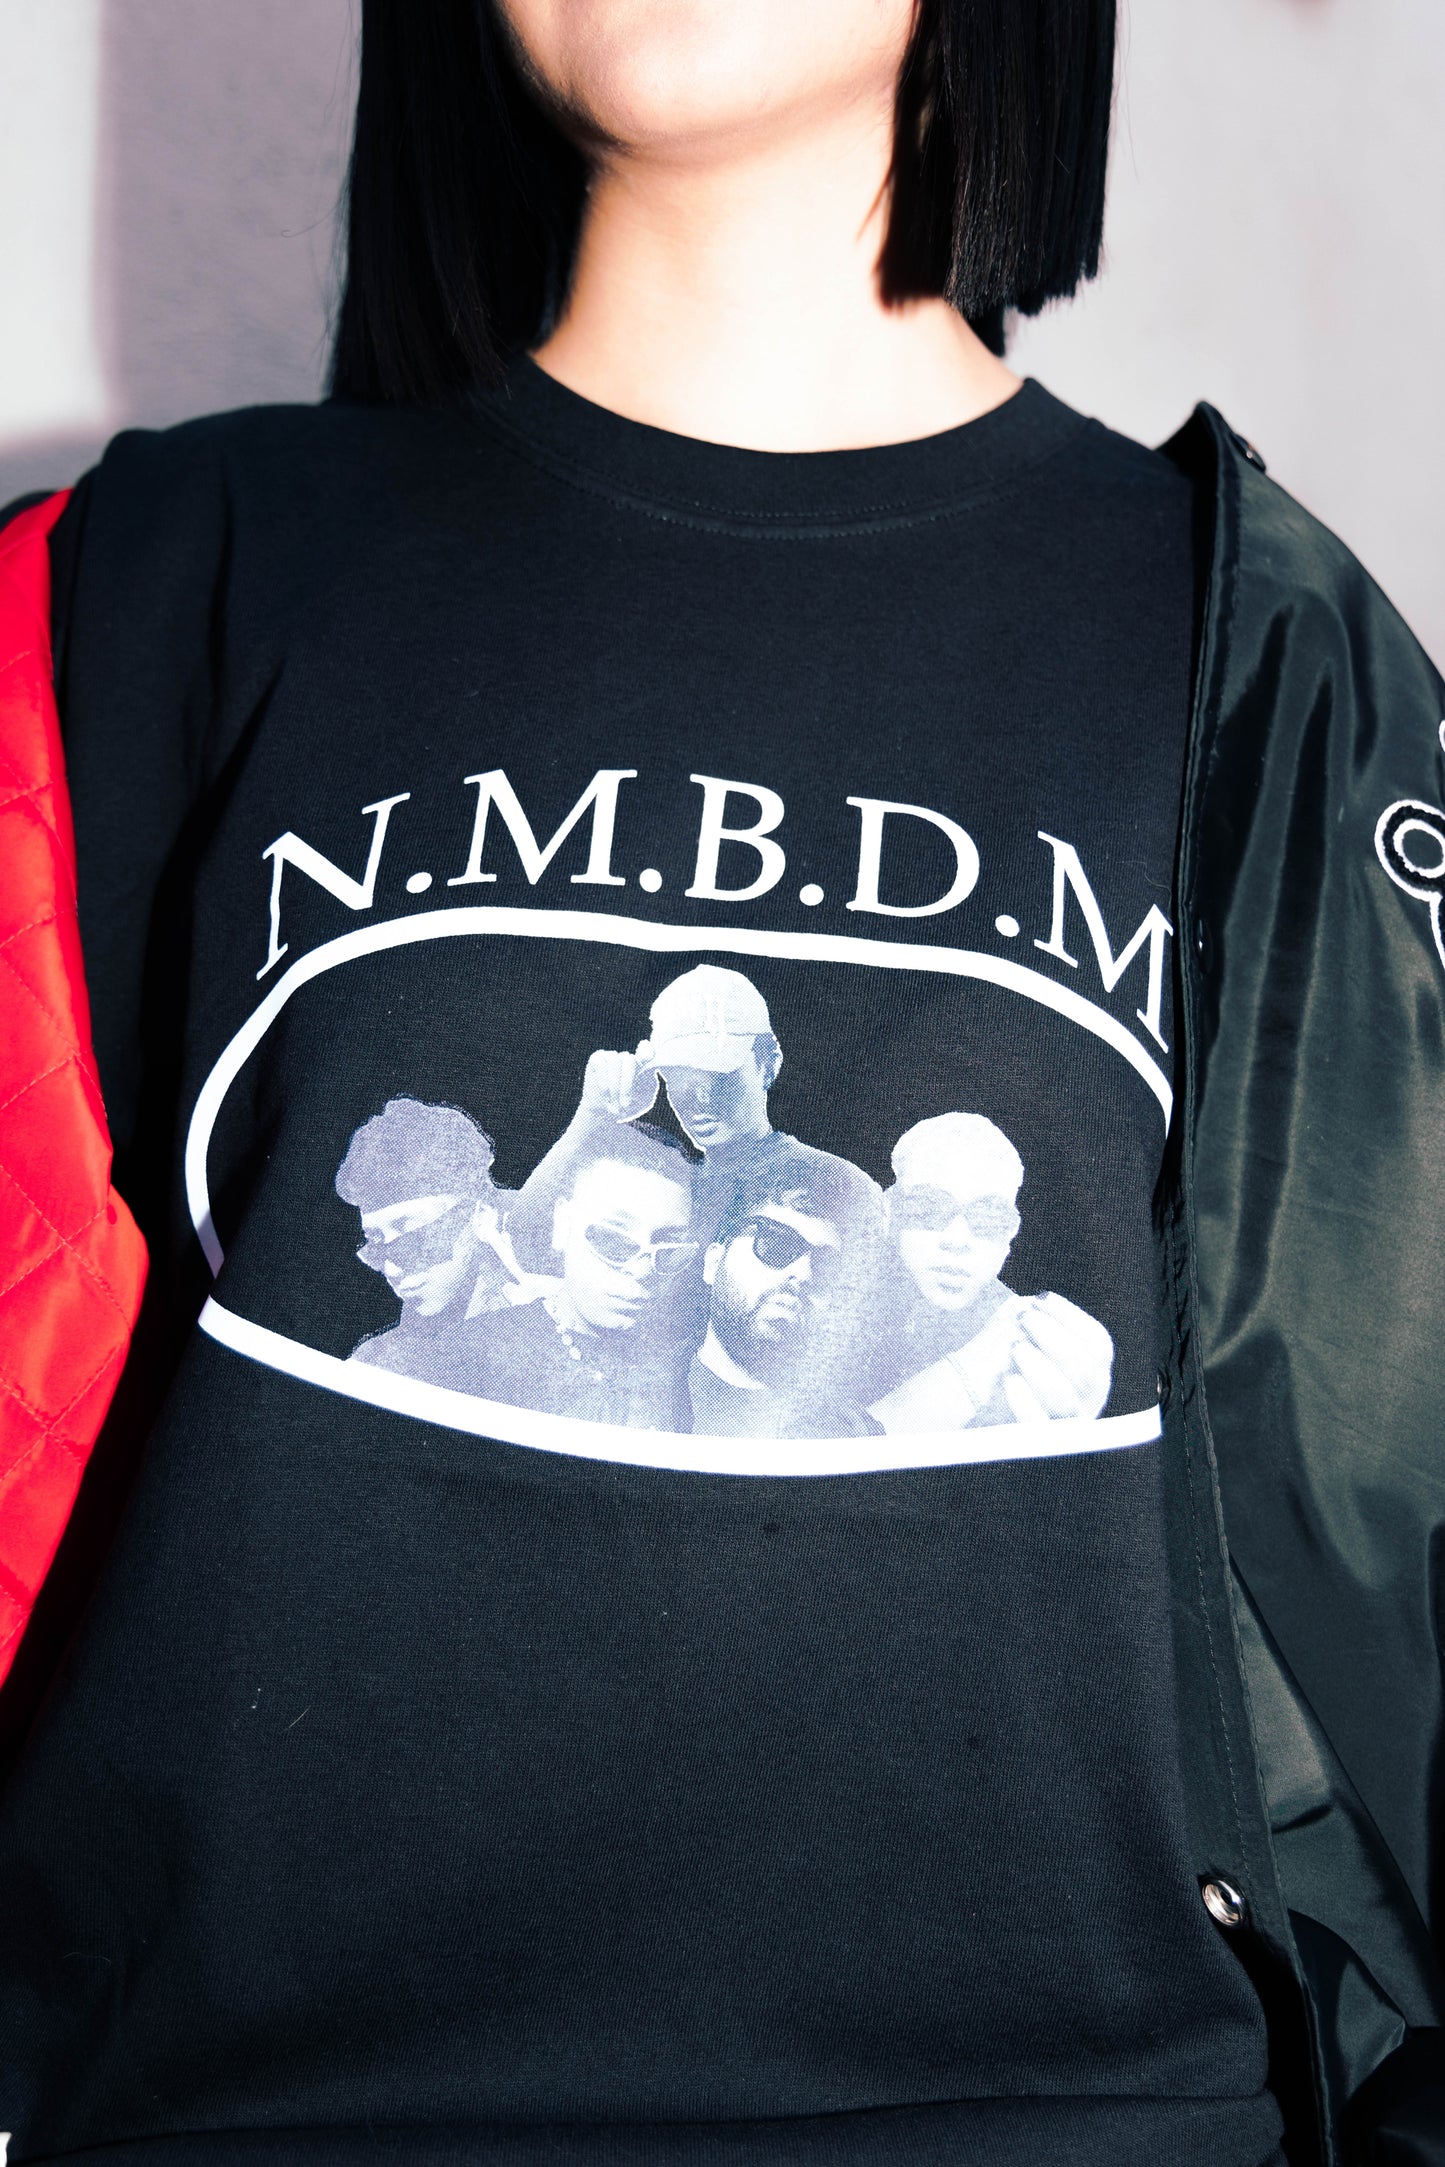 "NMBDM AHAH" Camiseta Unisex Fitting - Negra